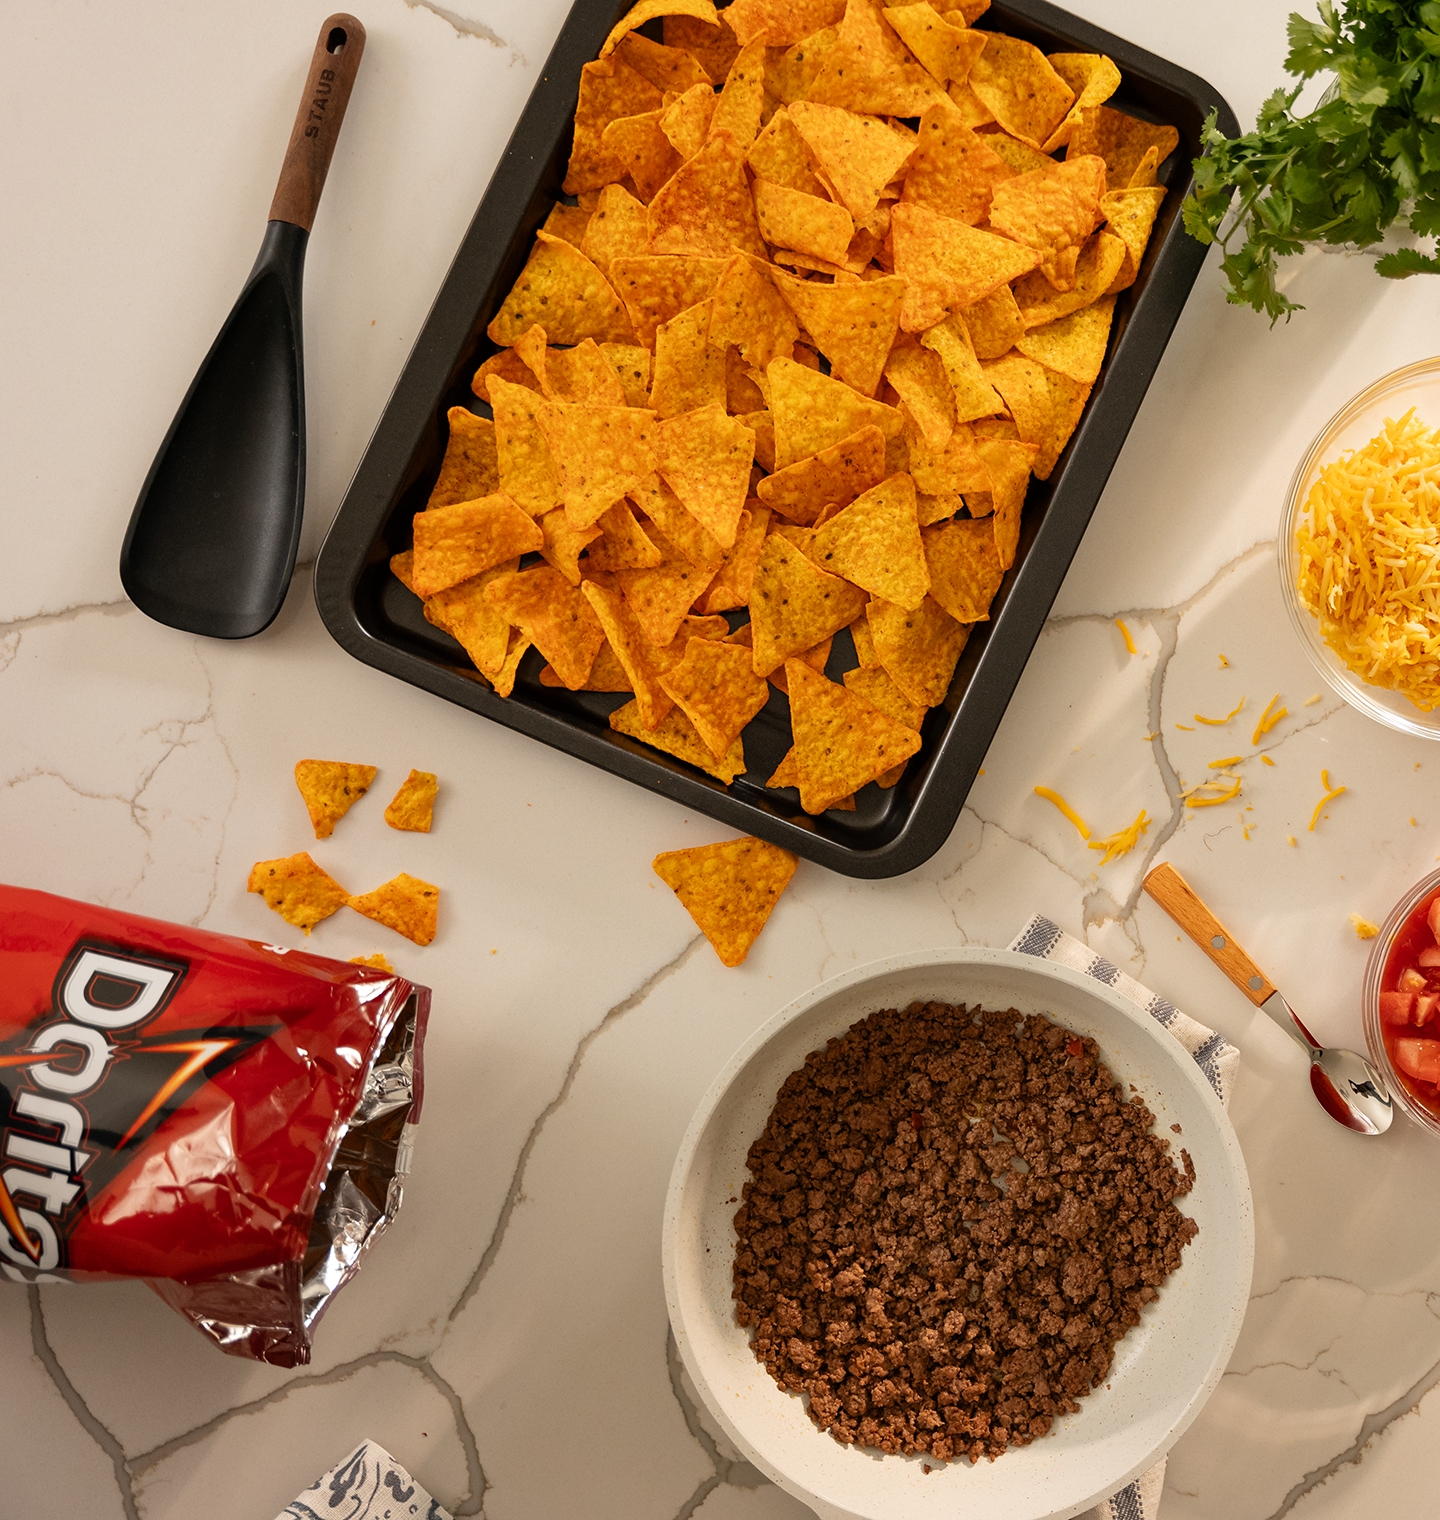 Ingredients for Doritos nachos